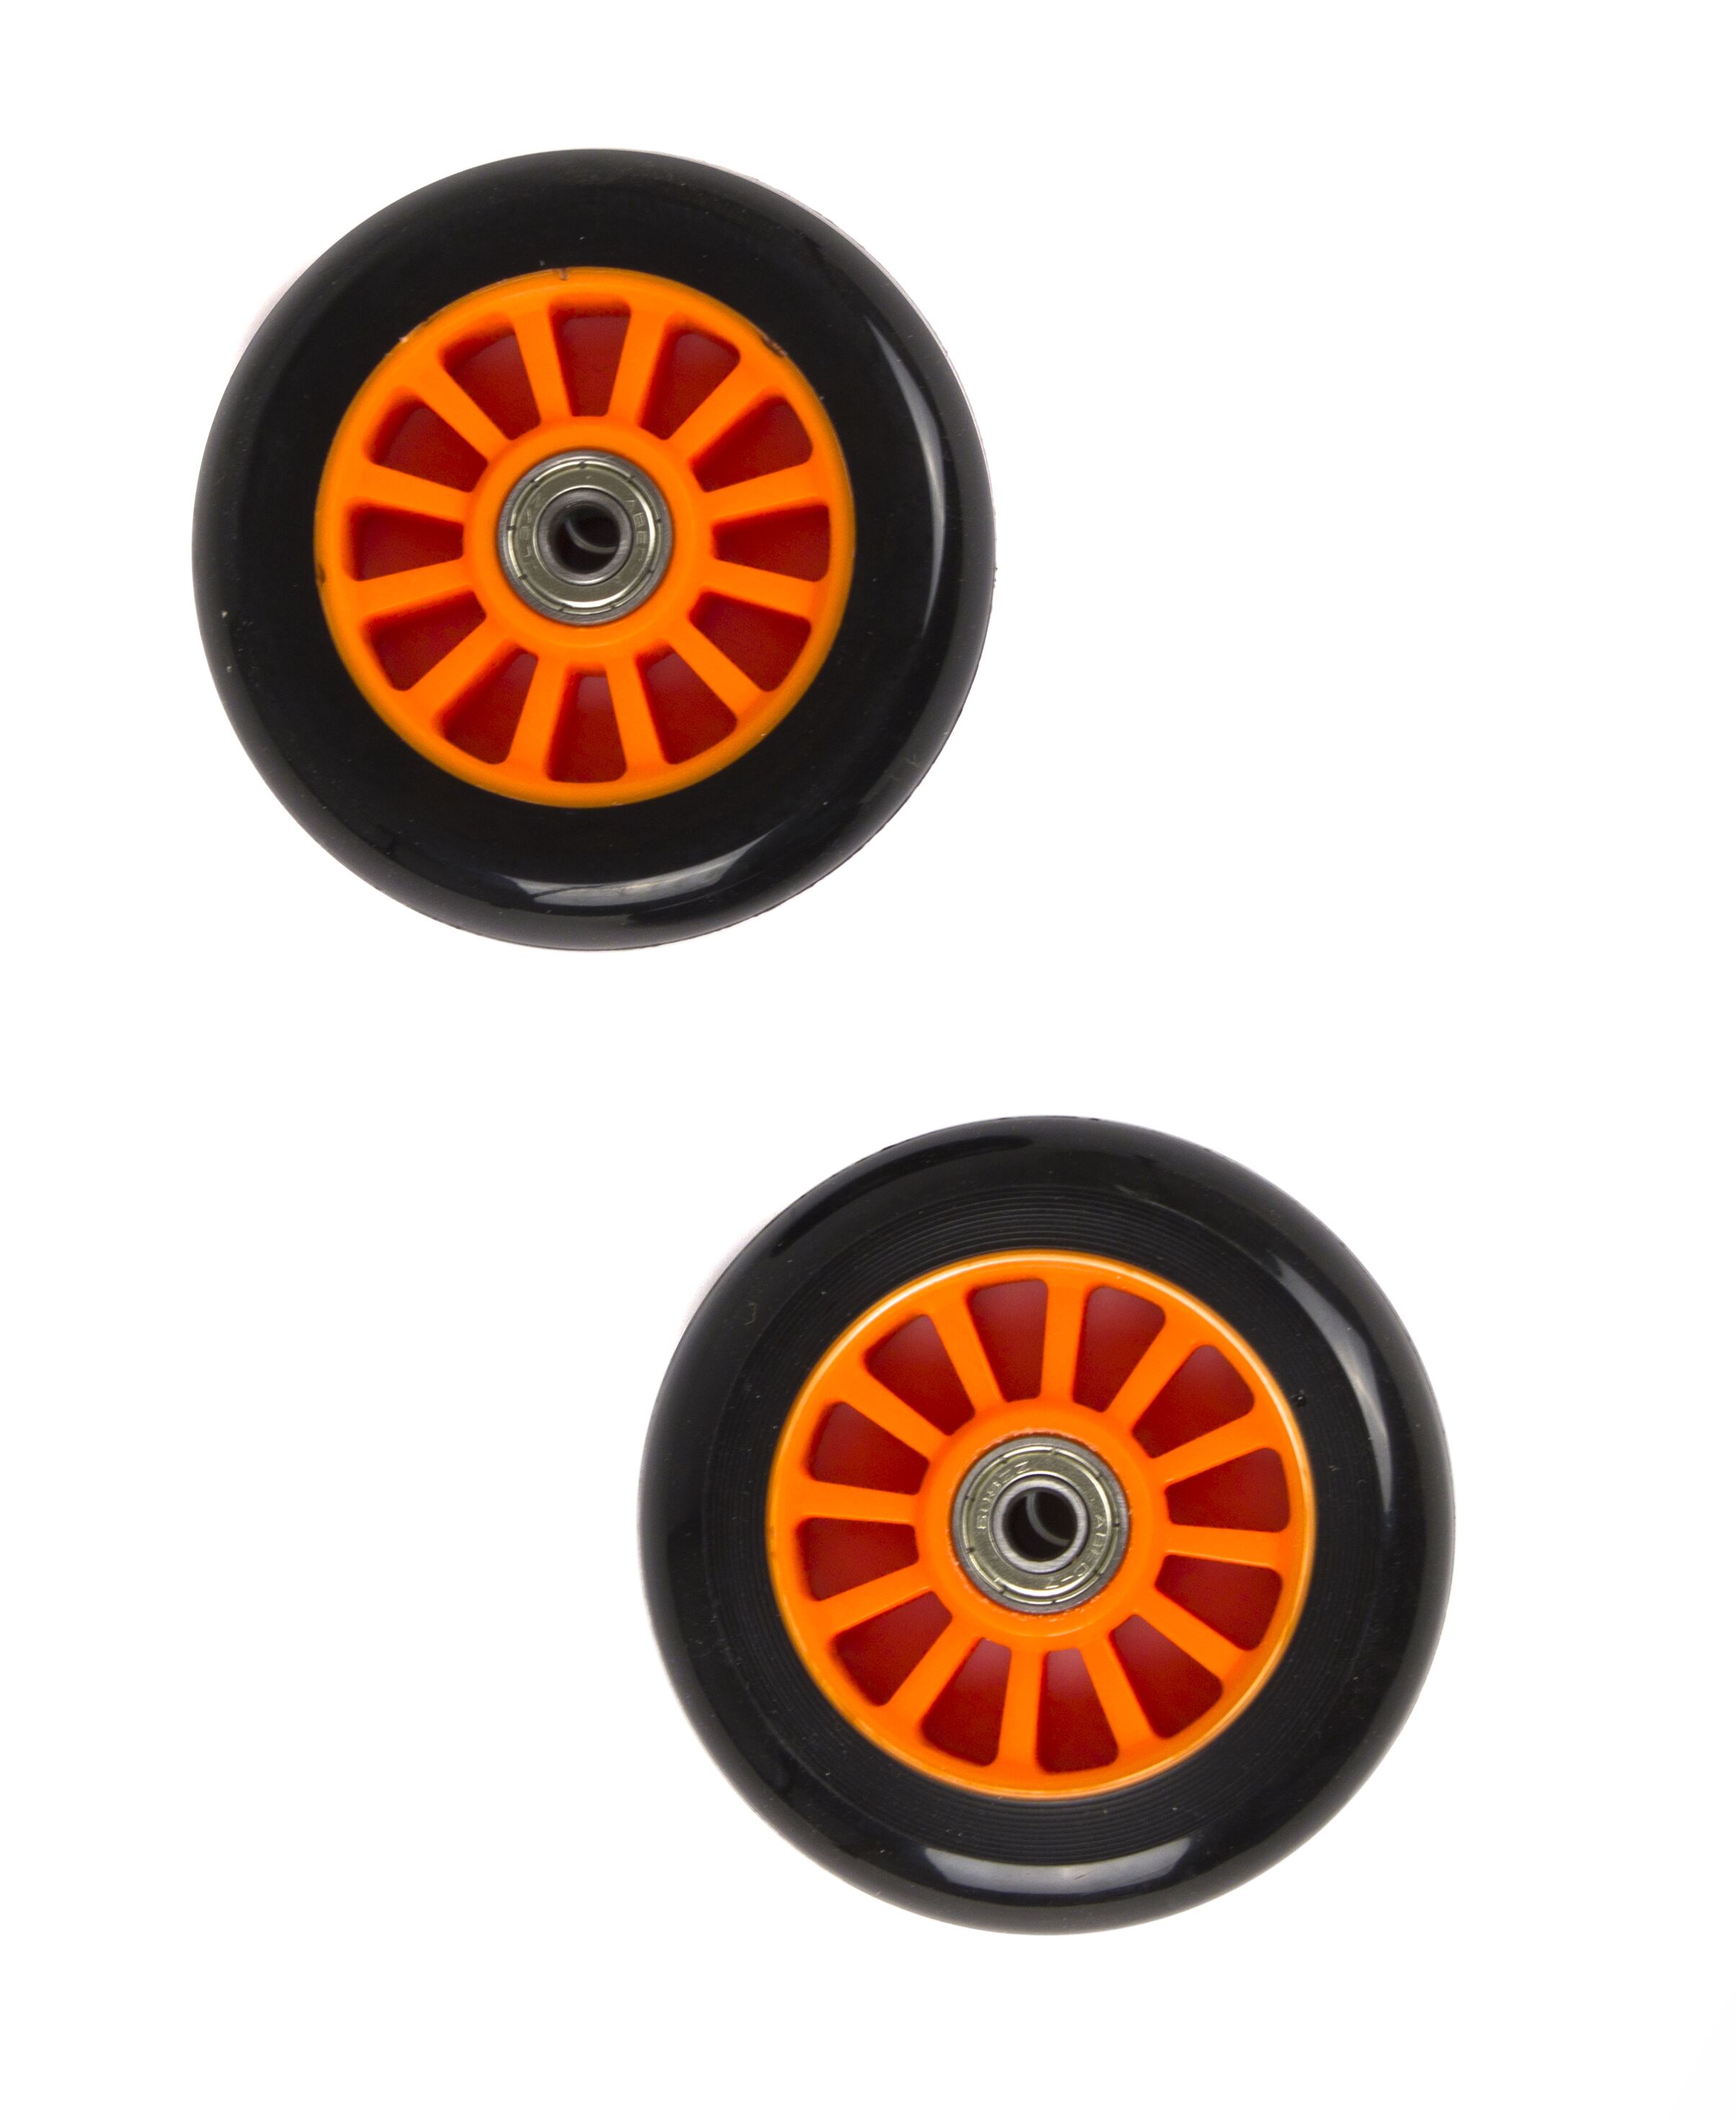 My Hood - 2 Wheels for Trick Scooters 100 mm - Black/Orange (505084)